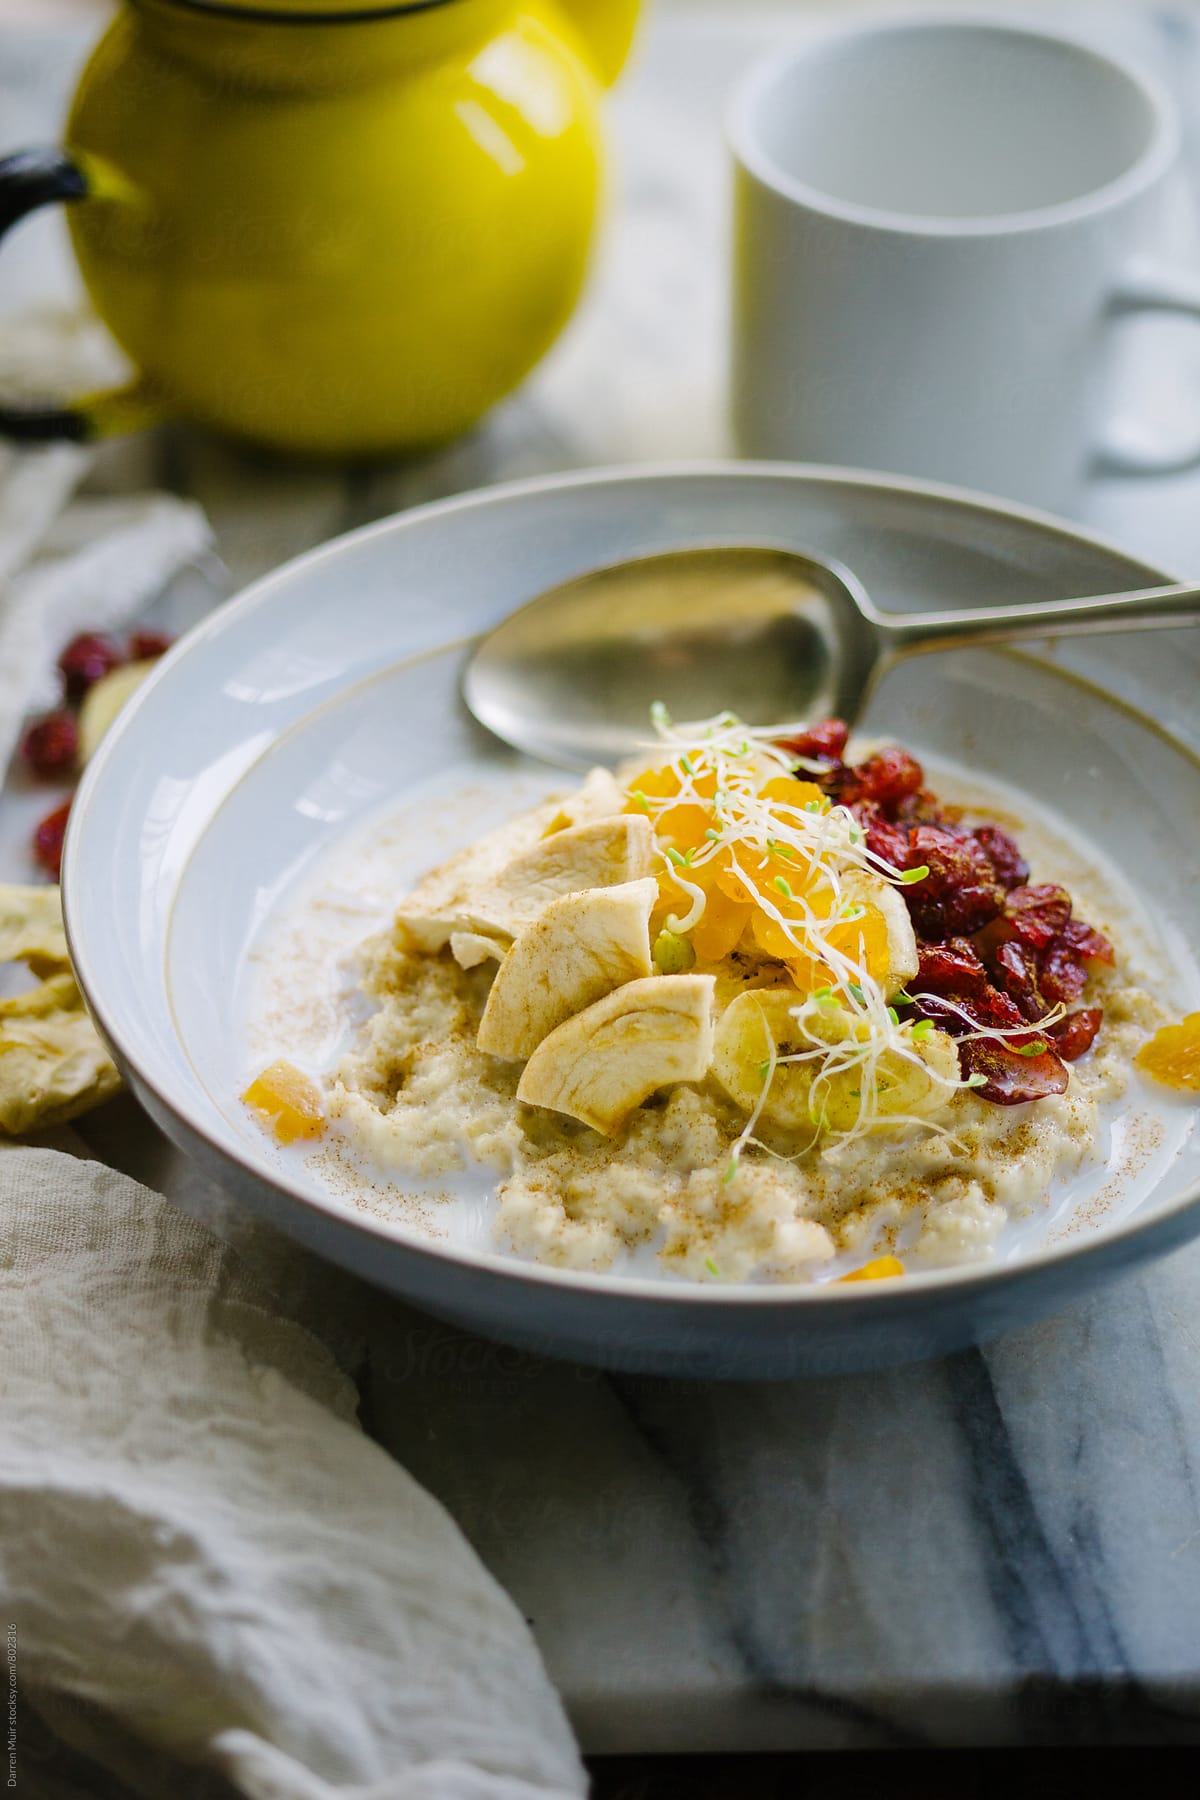 Breakfast: Healthy bowl of oat porridge with dried fruits.